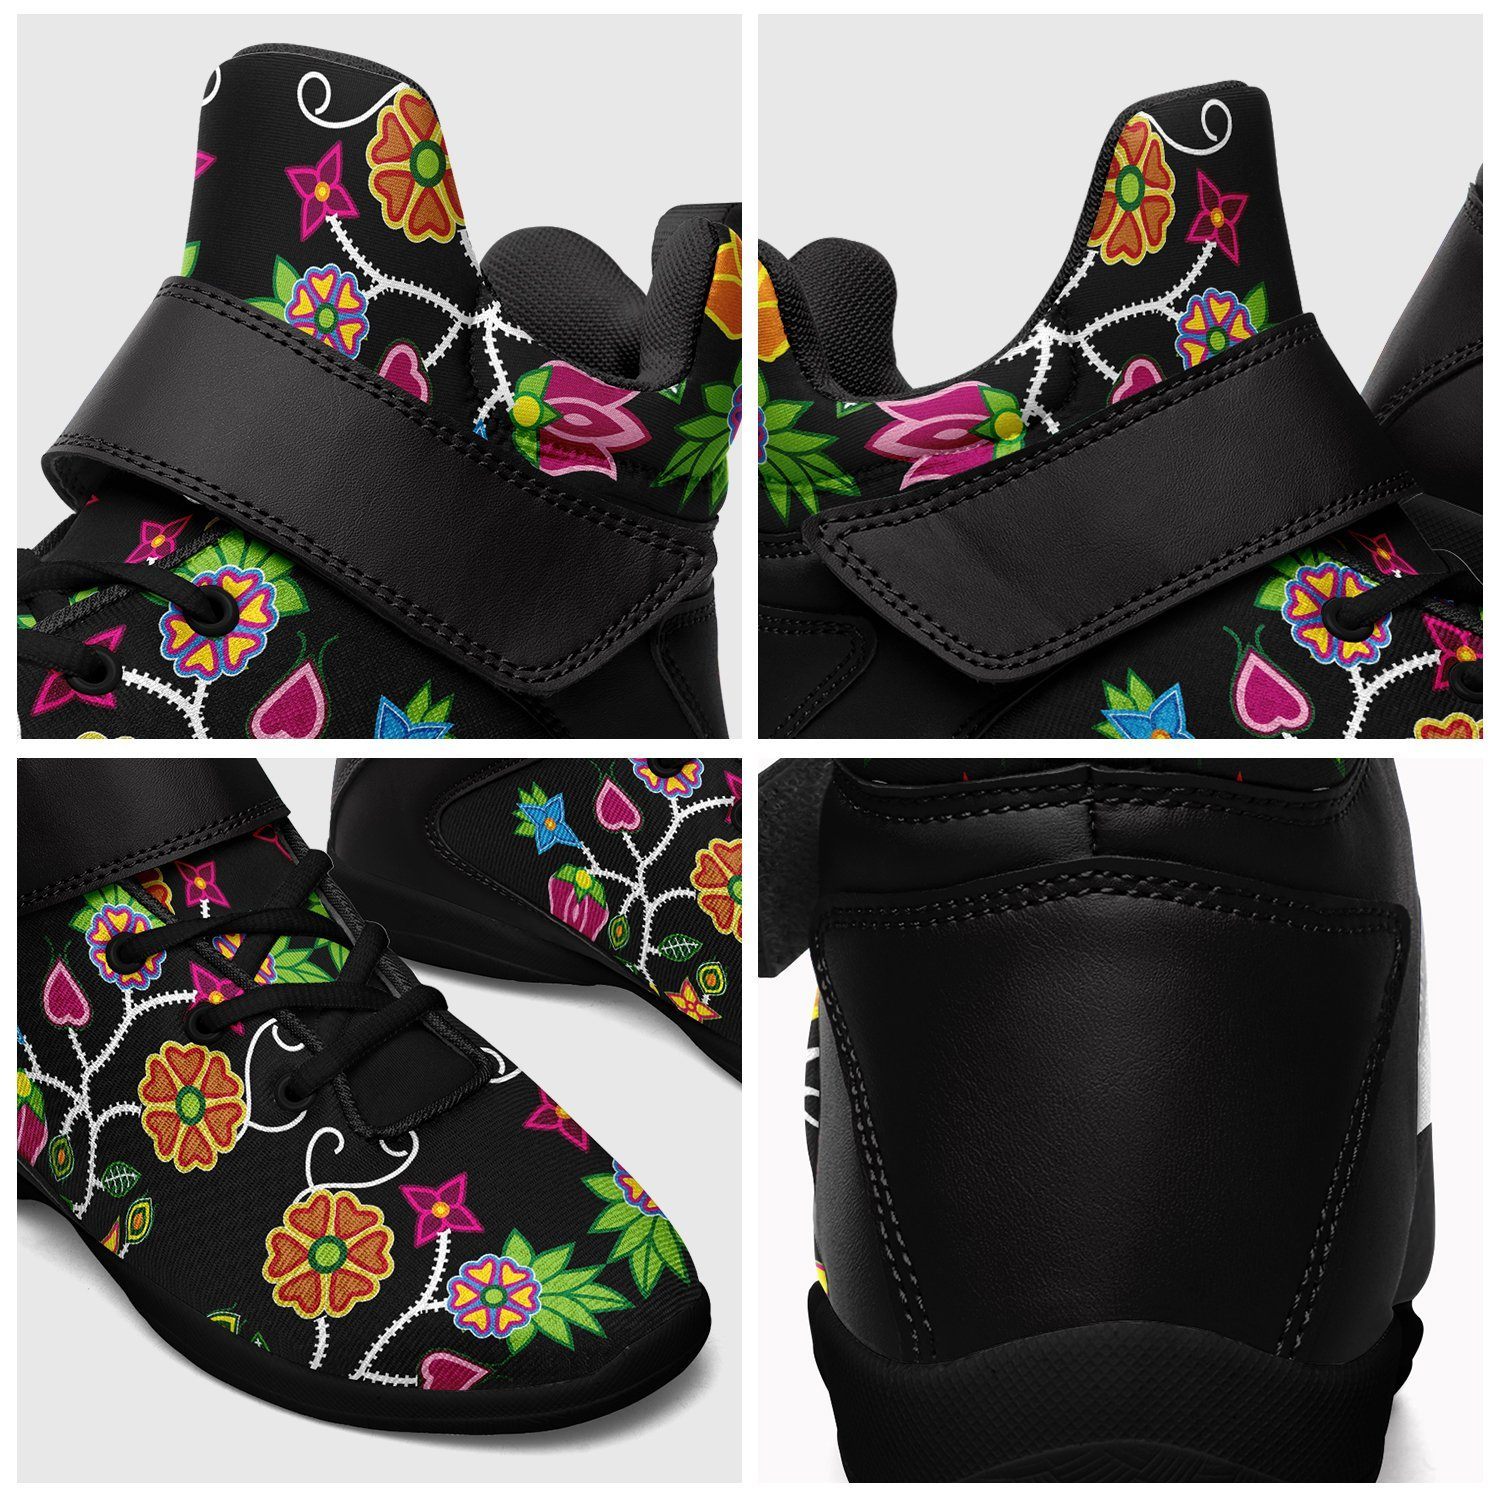 Floral Beadwork Ipottaa Basketball / Sport High Top Shoes - Black Sole 49 Dzine 